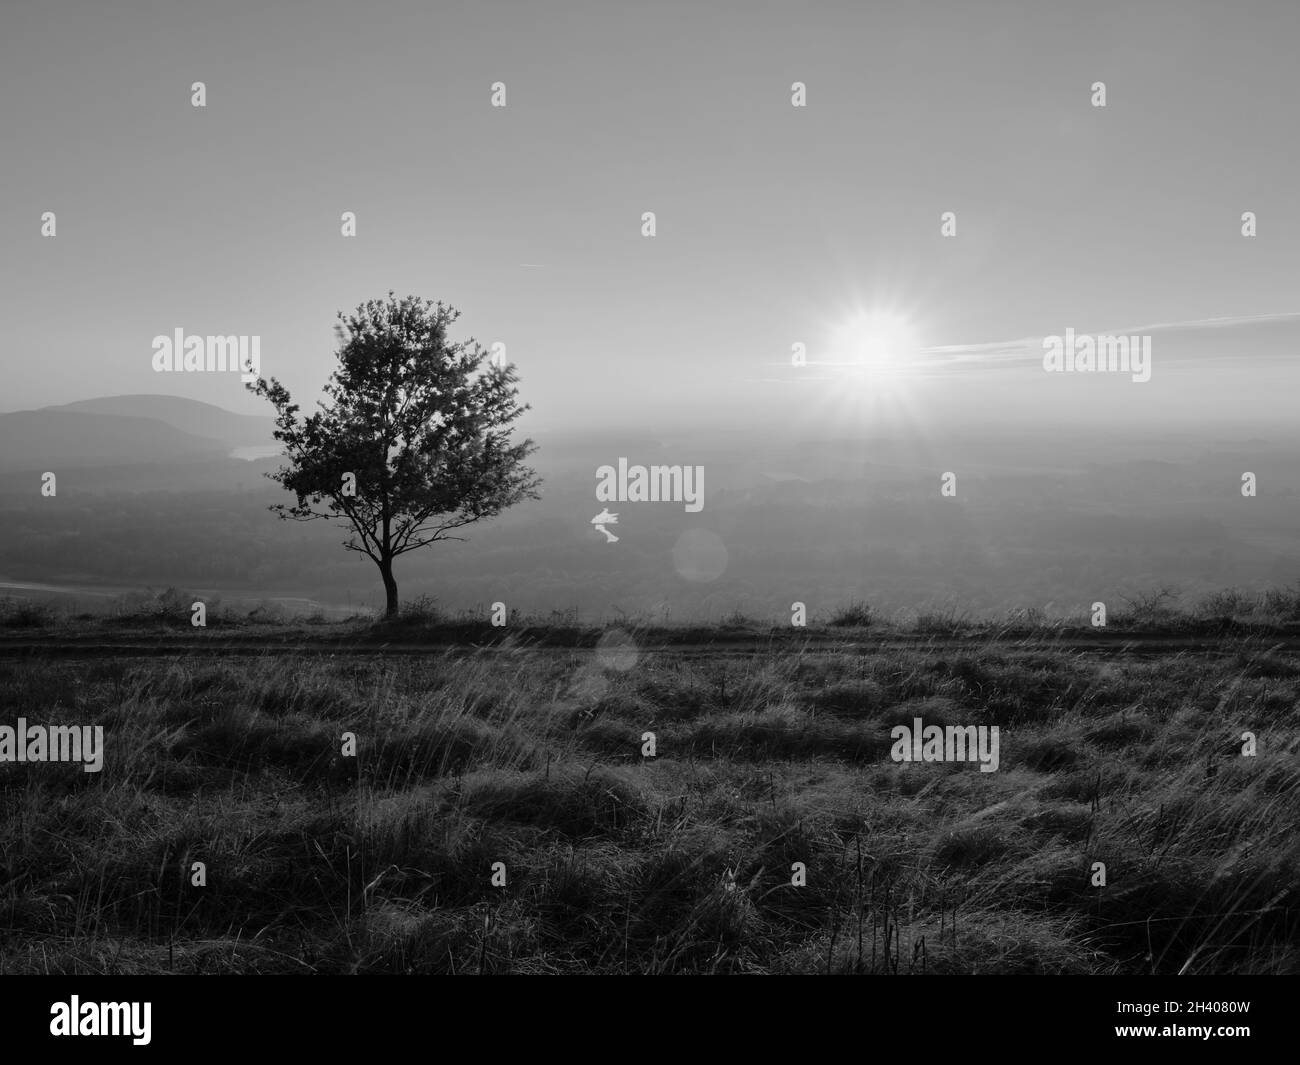 Tree, hills and sunset in black and white, Sandberg, Slovakia Stock Photo